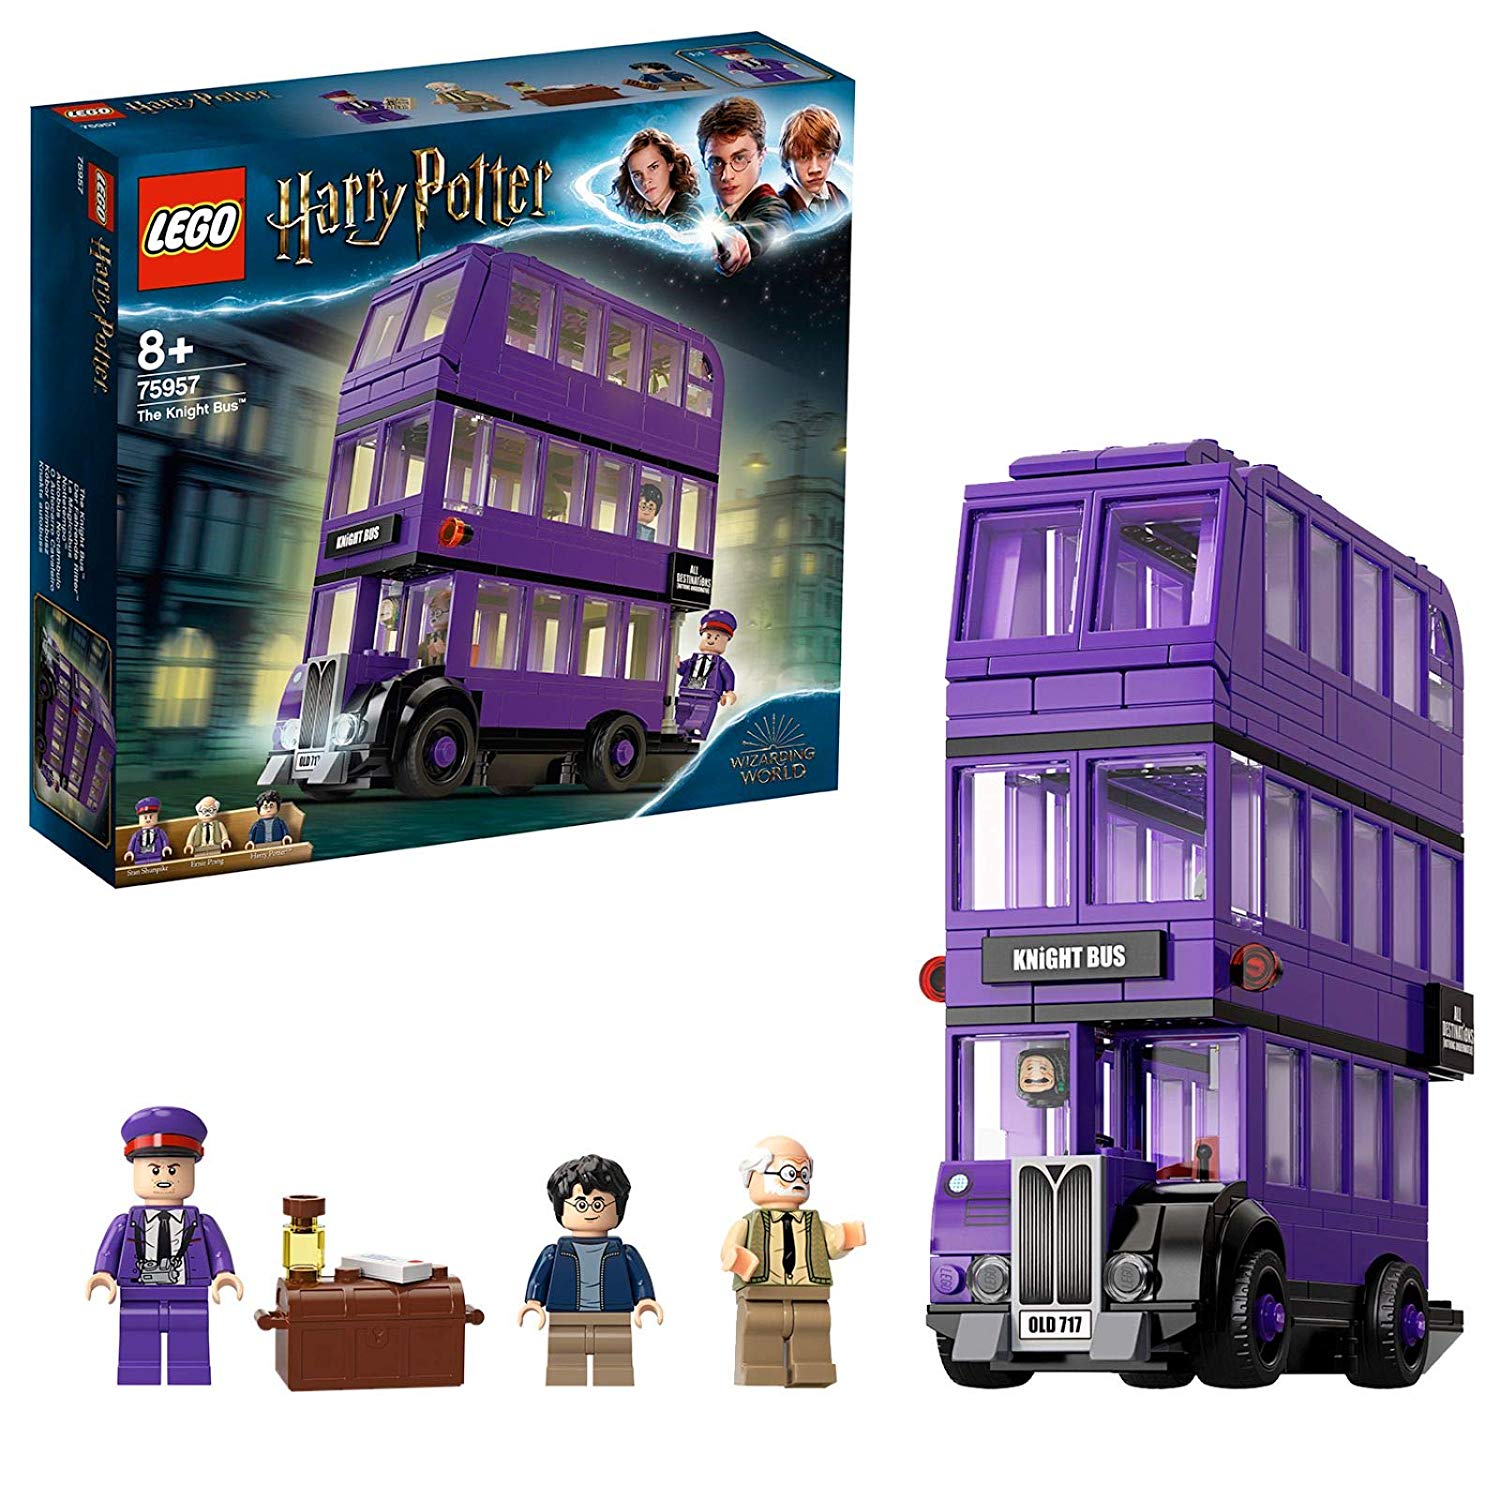 Lego 75957 Harry Potter Knight Bus Toy, Triple-Decker Bus Set